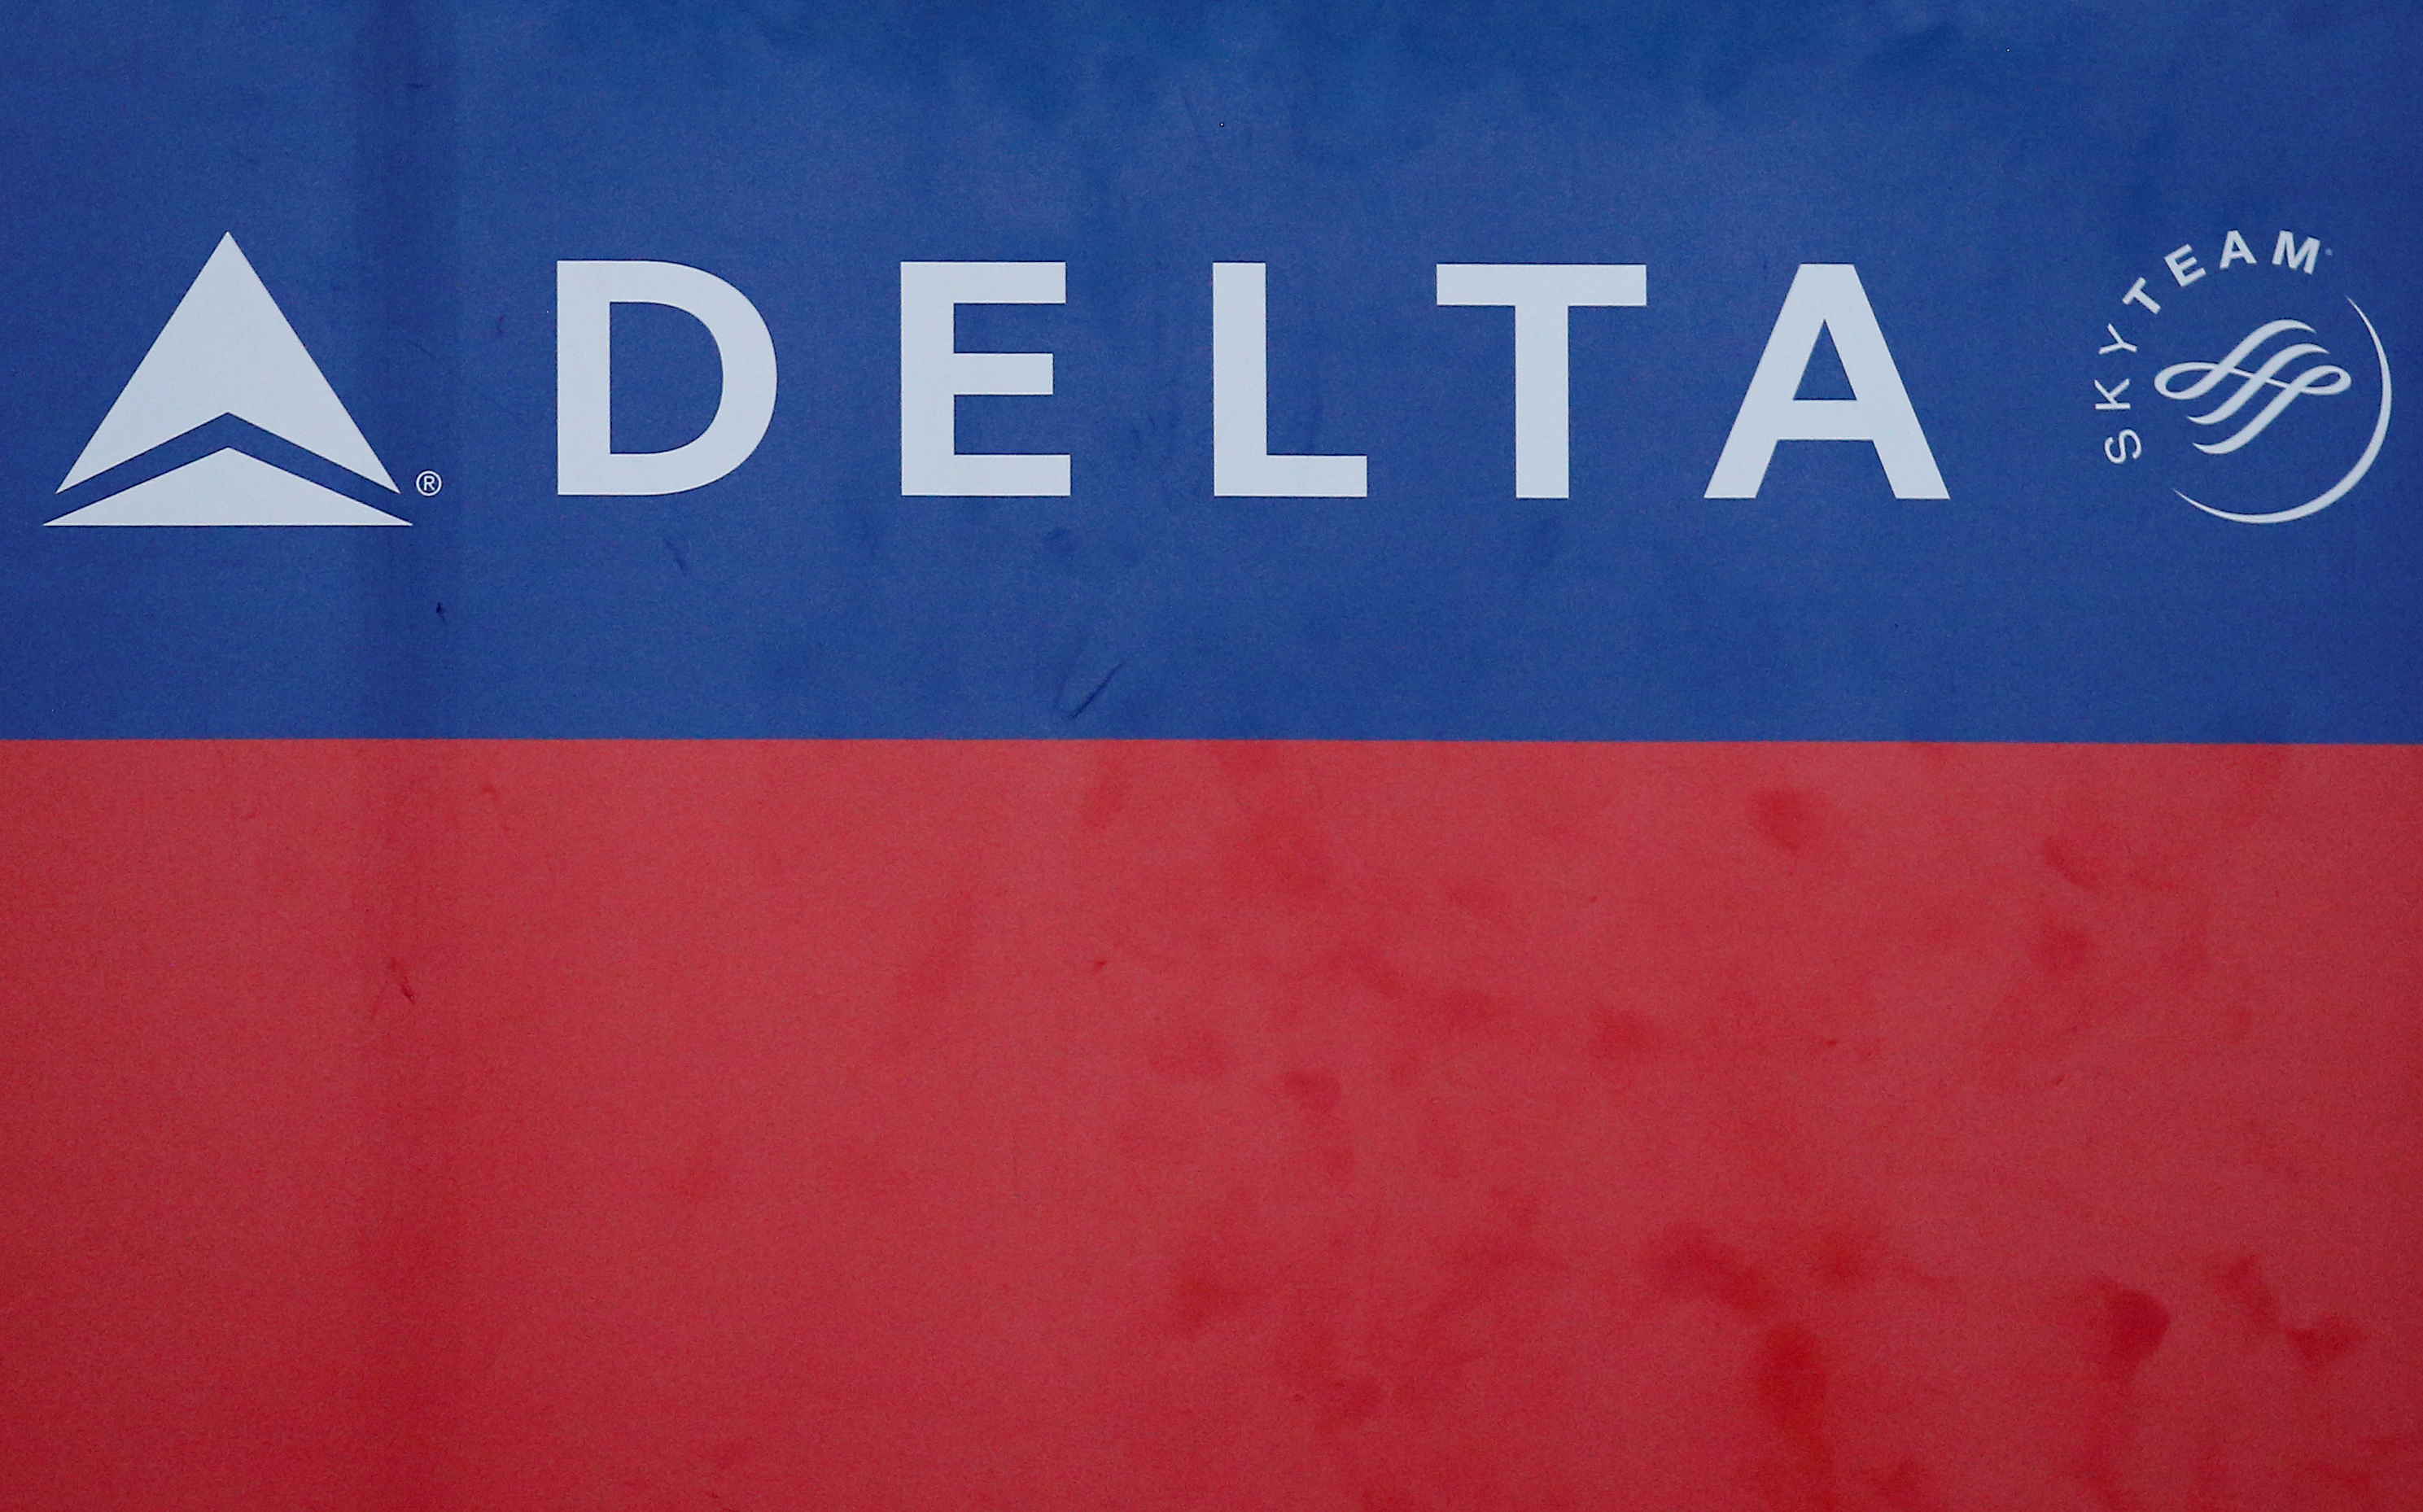 Delta airlines logo is seen inside of the Commodore Arturo Merino Benitez International Airport in Santiago